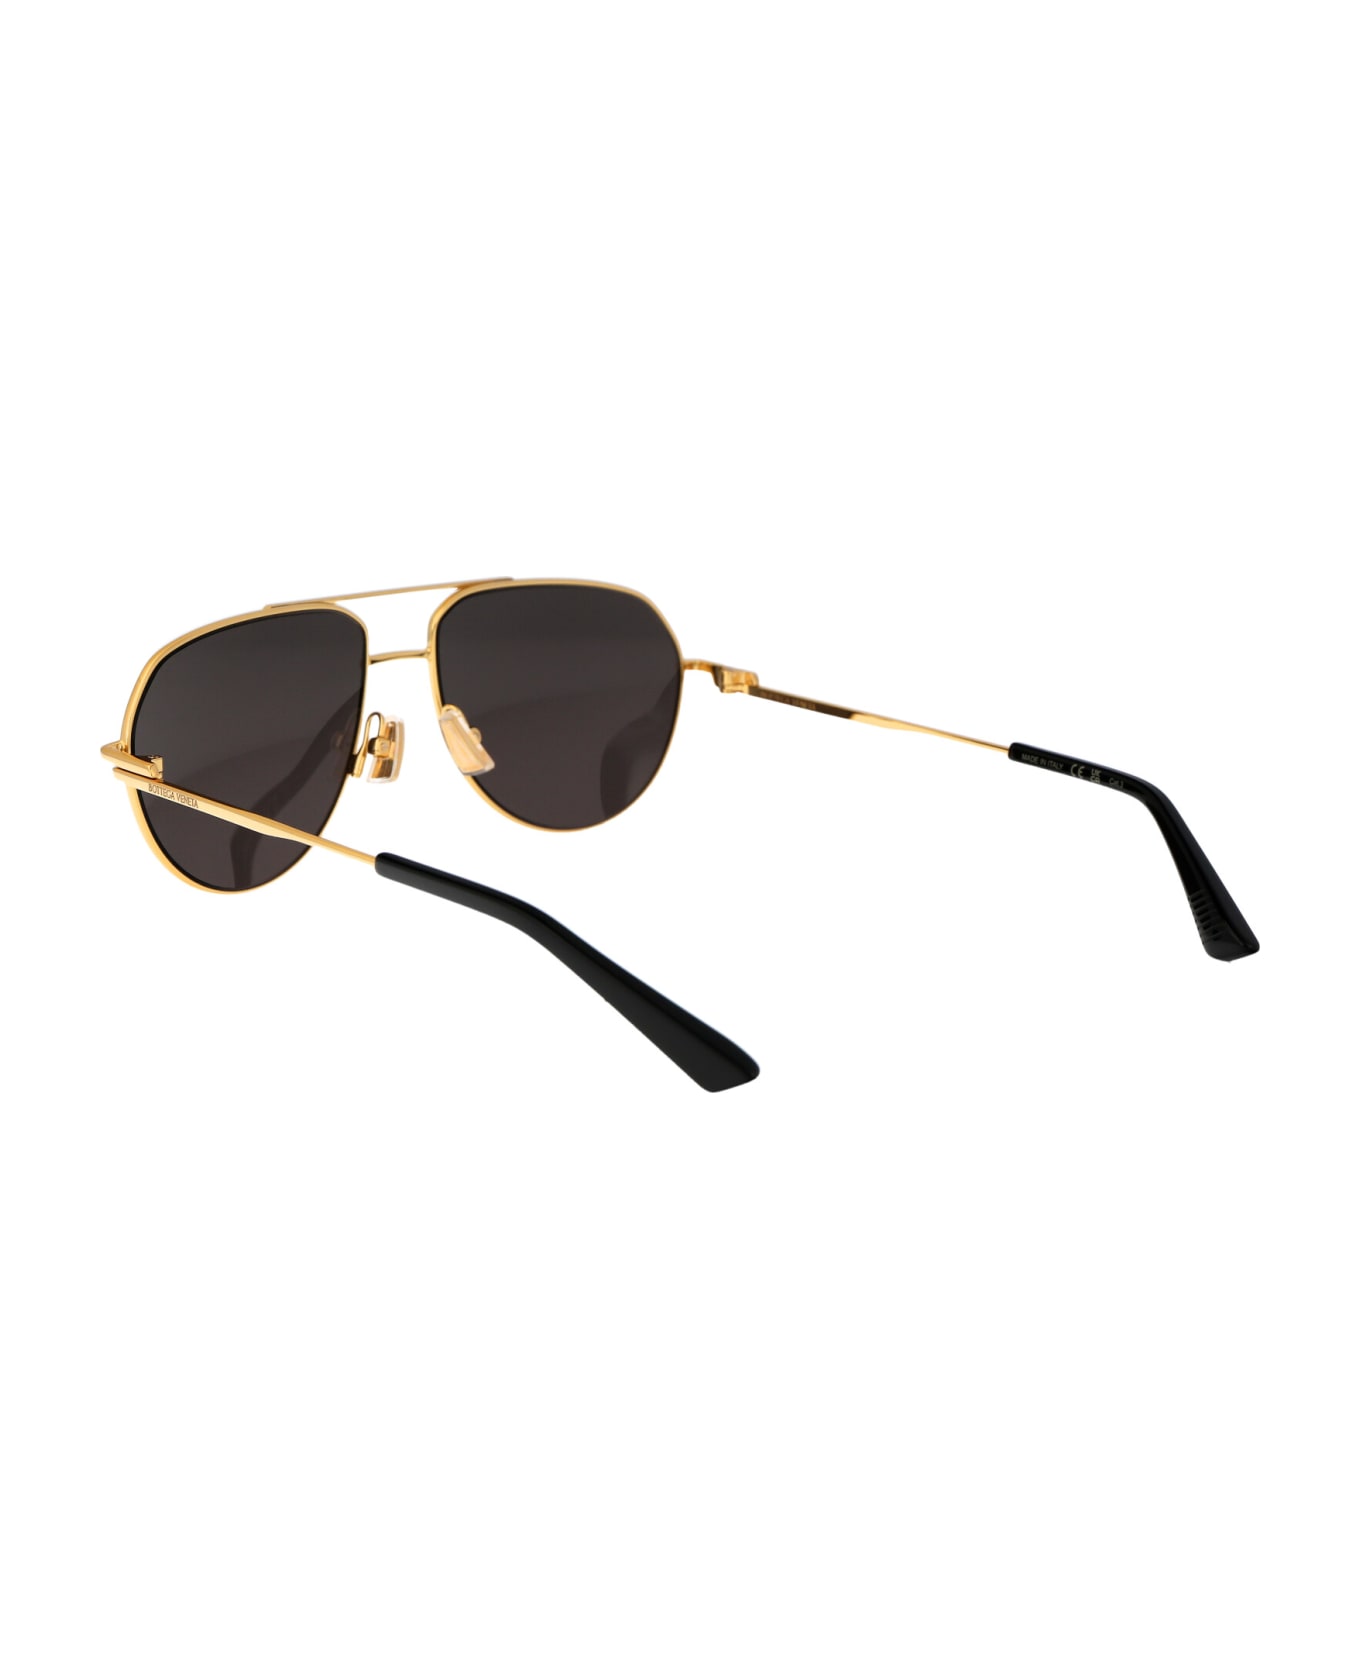 Bottega Veneta Eyewear Bv1302s Sunglasses - 001 GOLD GOLD GREY